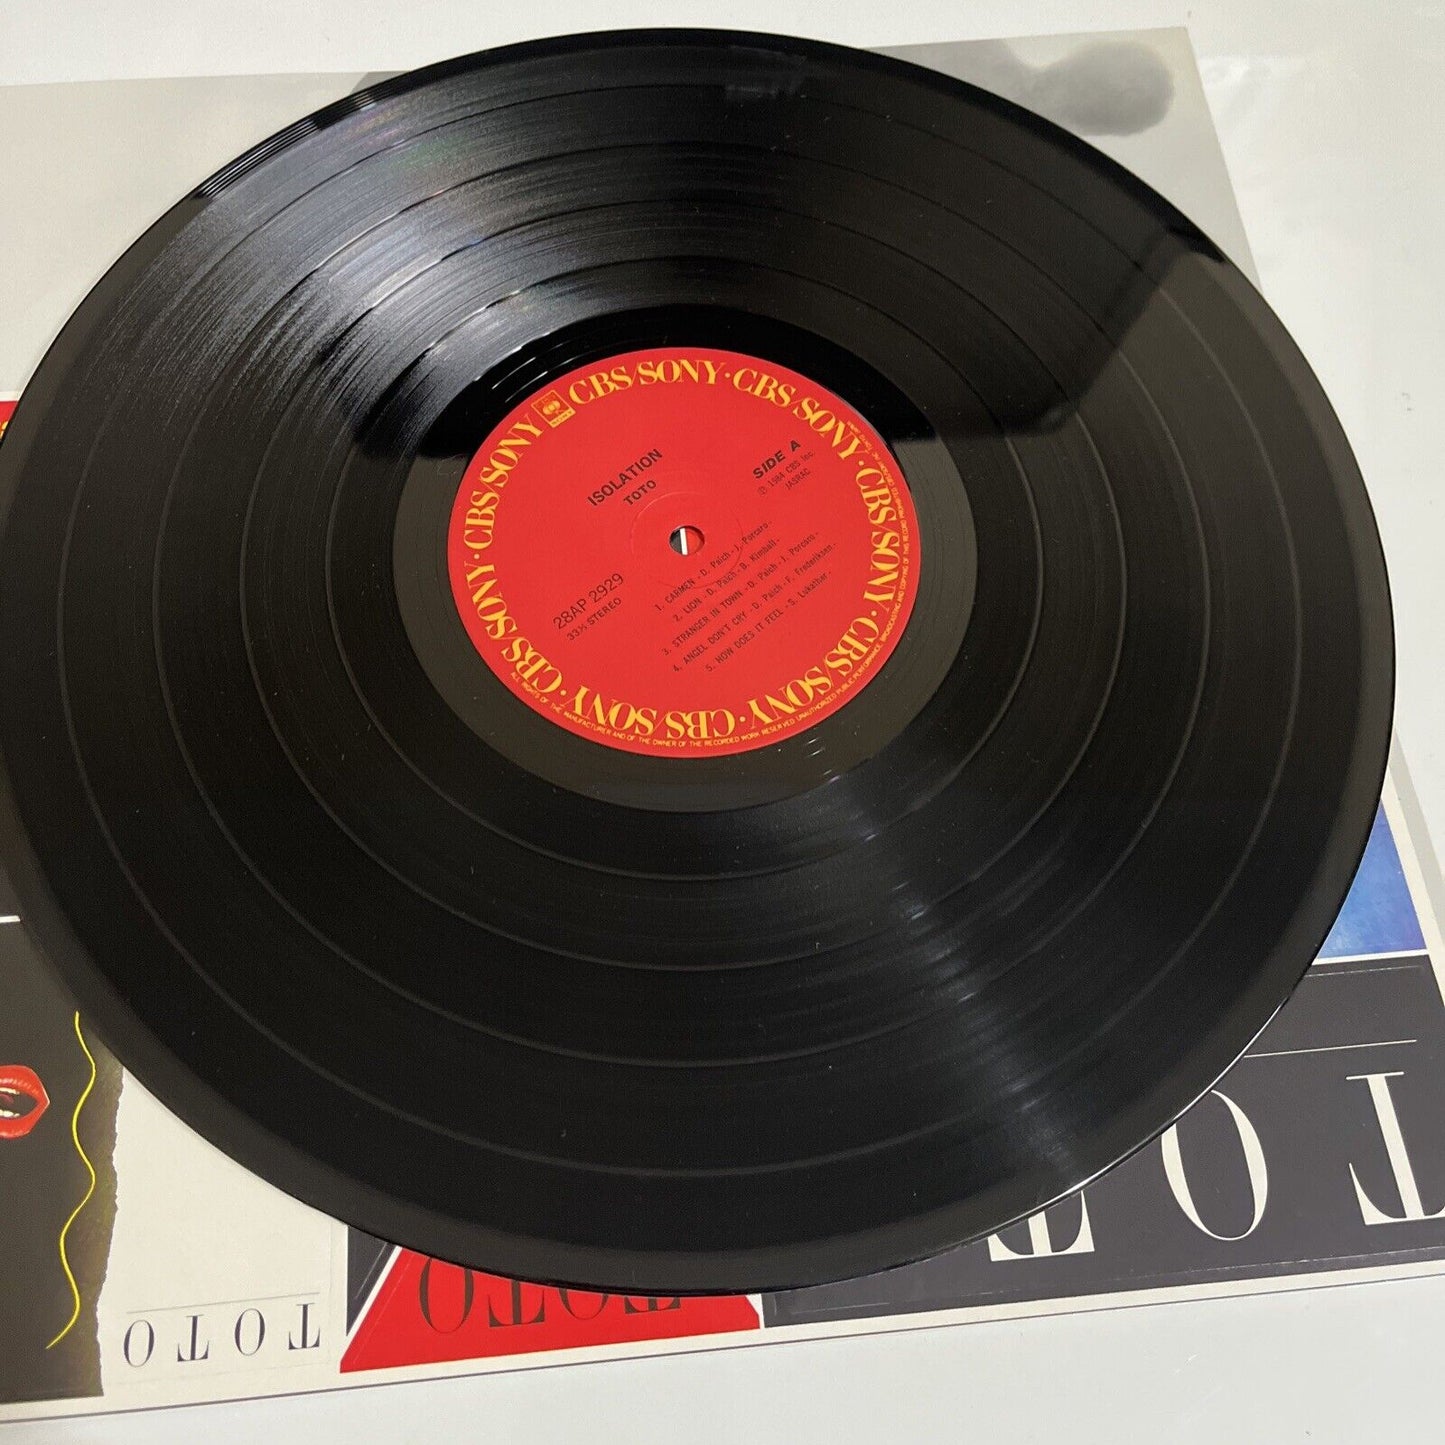 Toto – Isolation 1984 LP Vinyl Record Obi with Stickers 28AP 2929